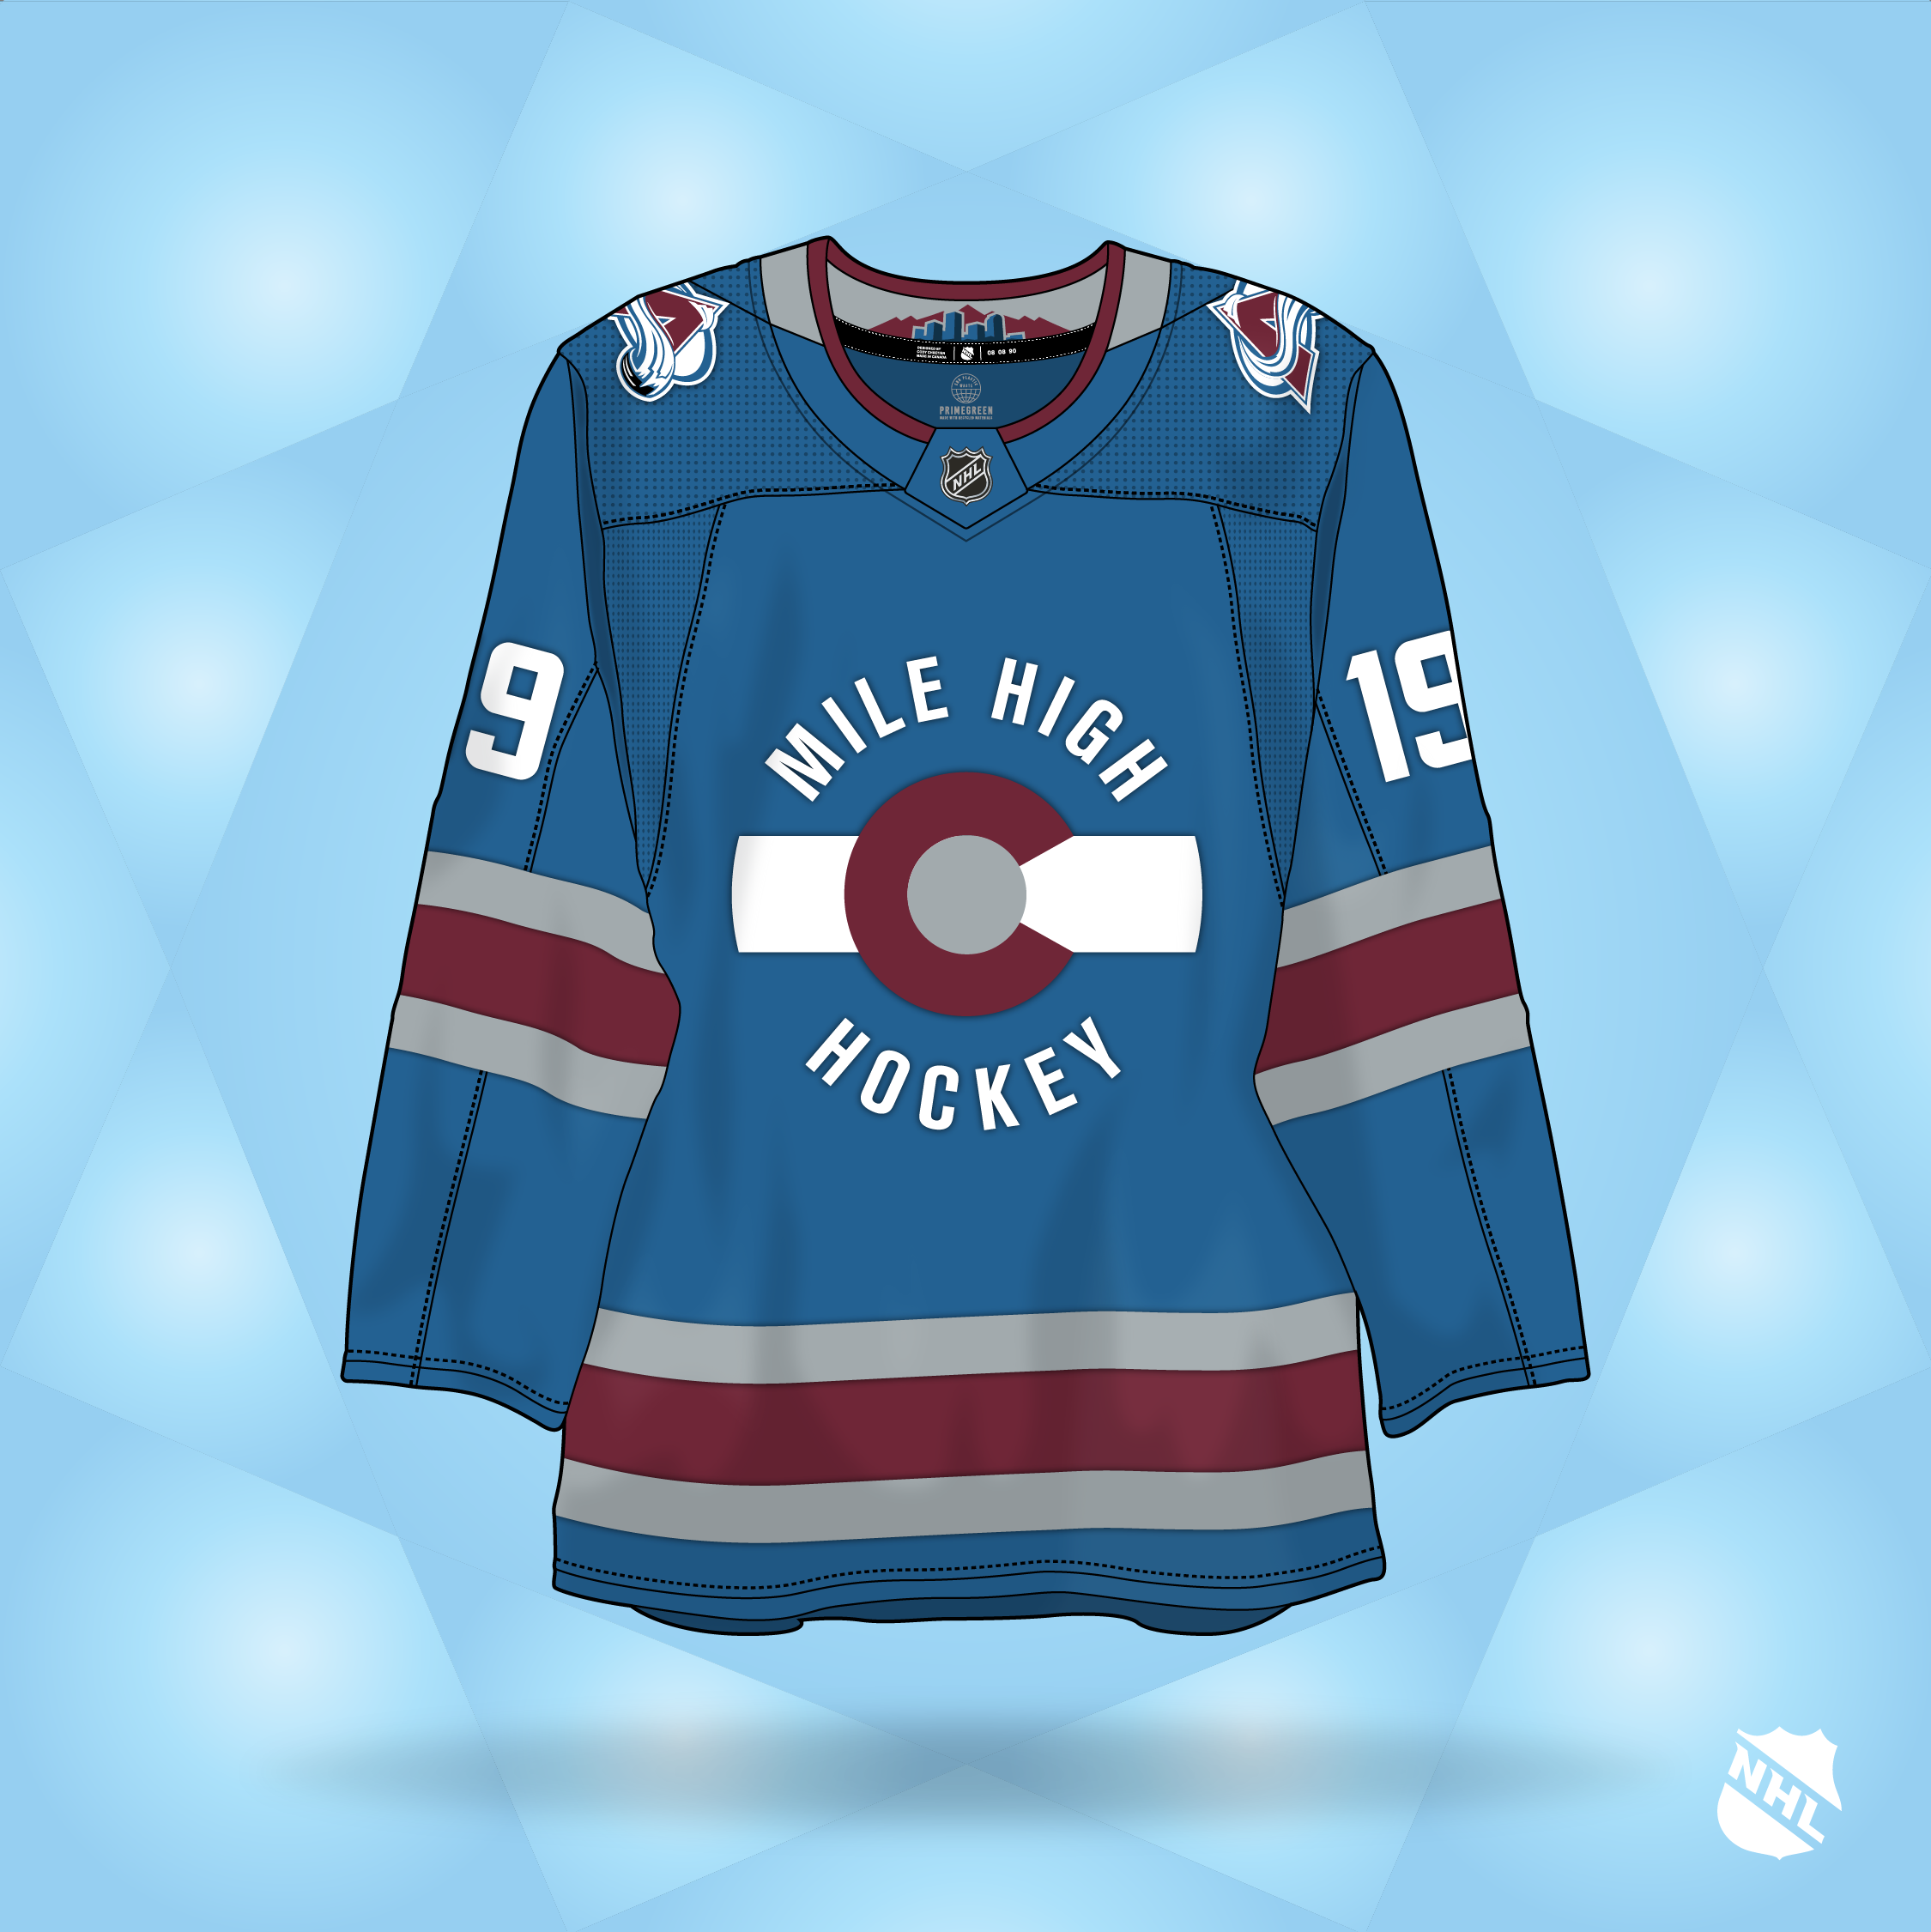 Hockey jersey nhl vintage - Gem